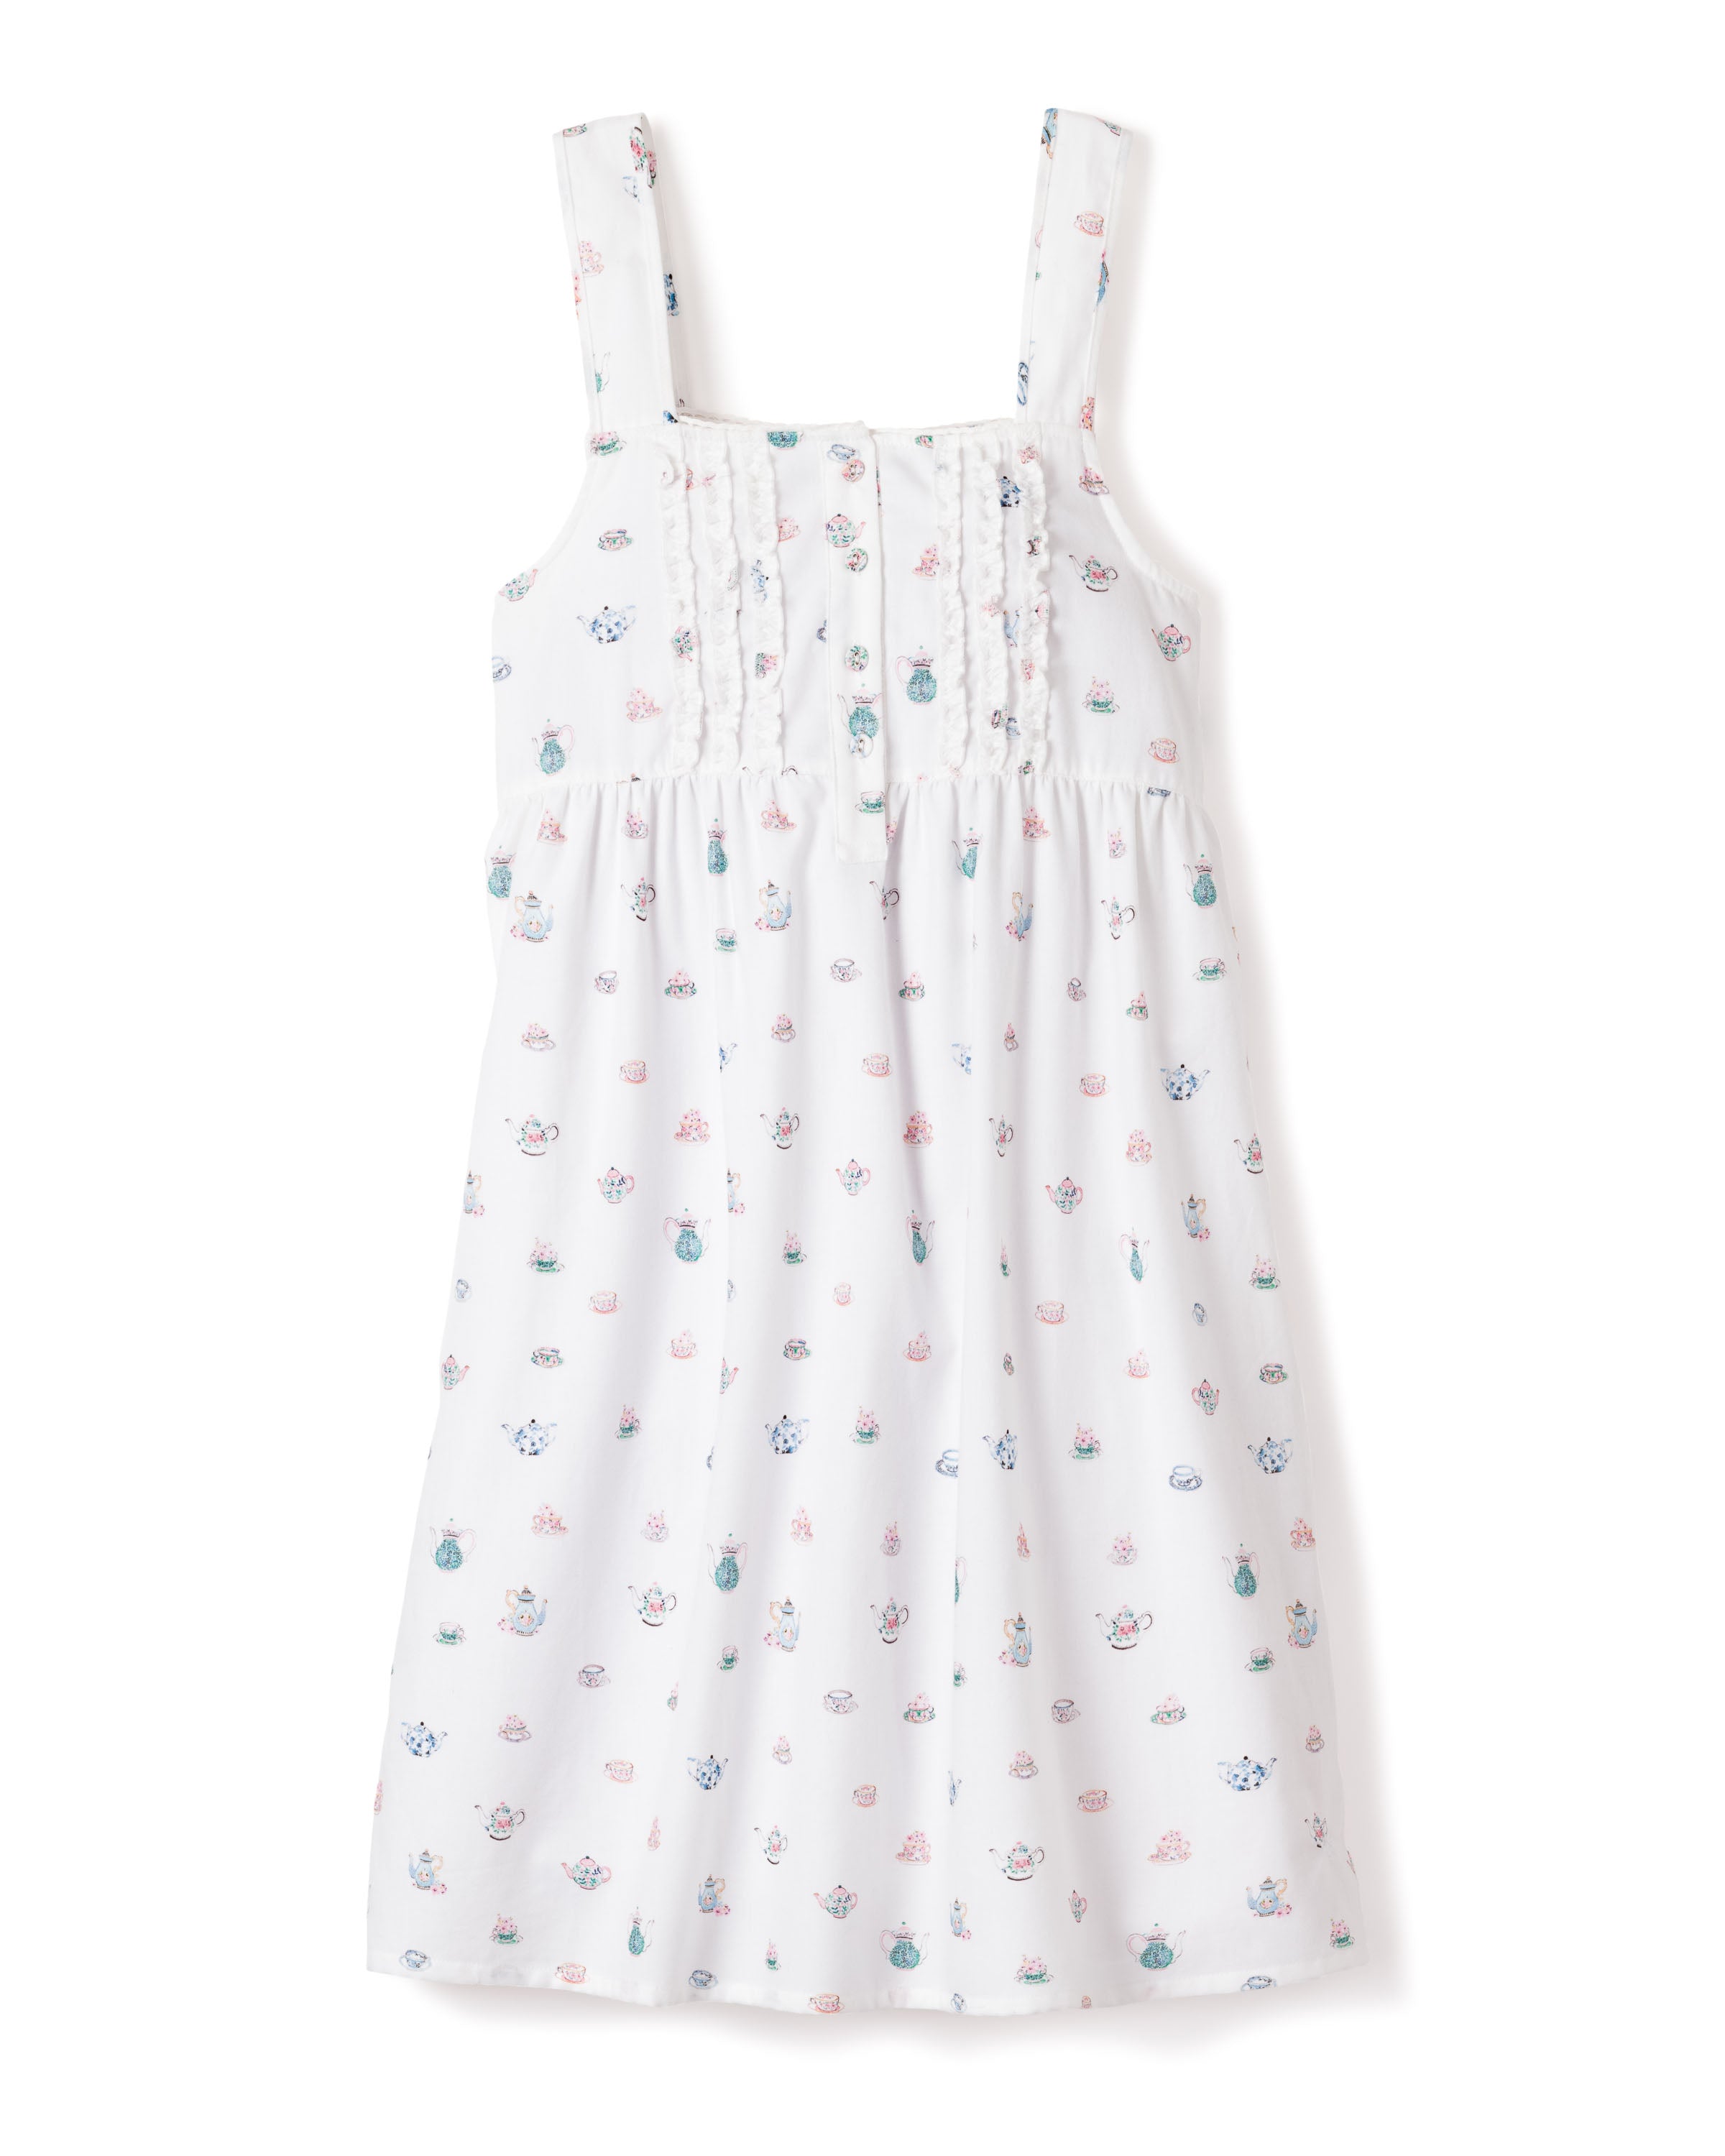 Hand-Smocked Pima Cotton Nightgown — Bonne Nuit